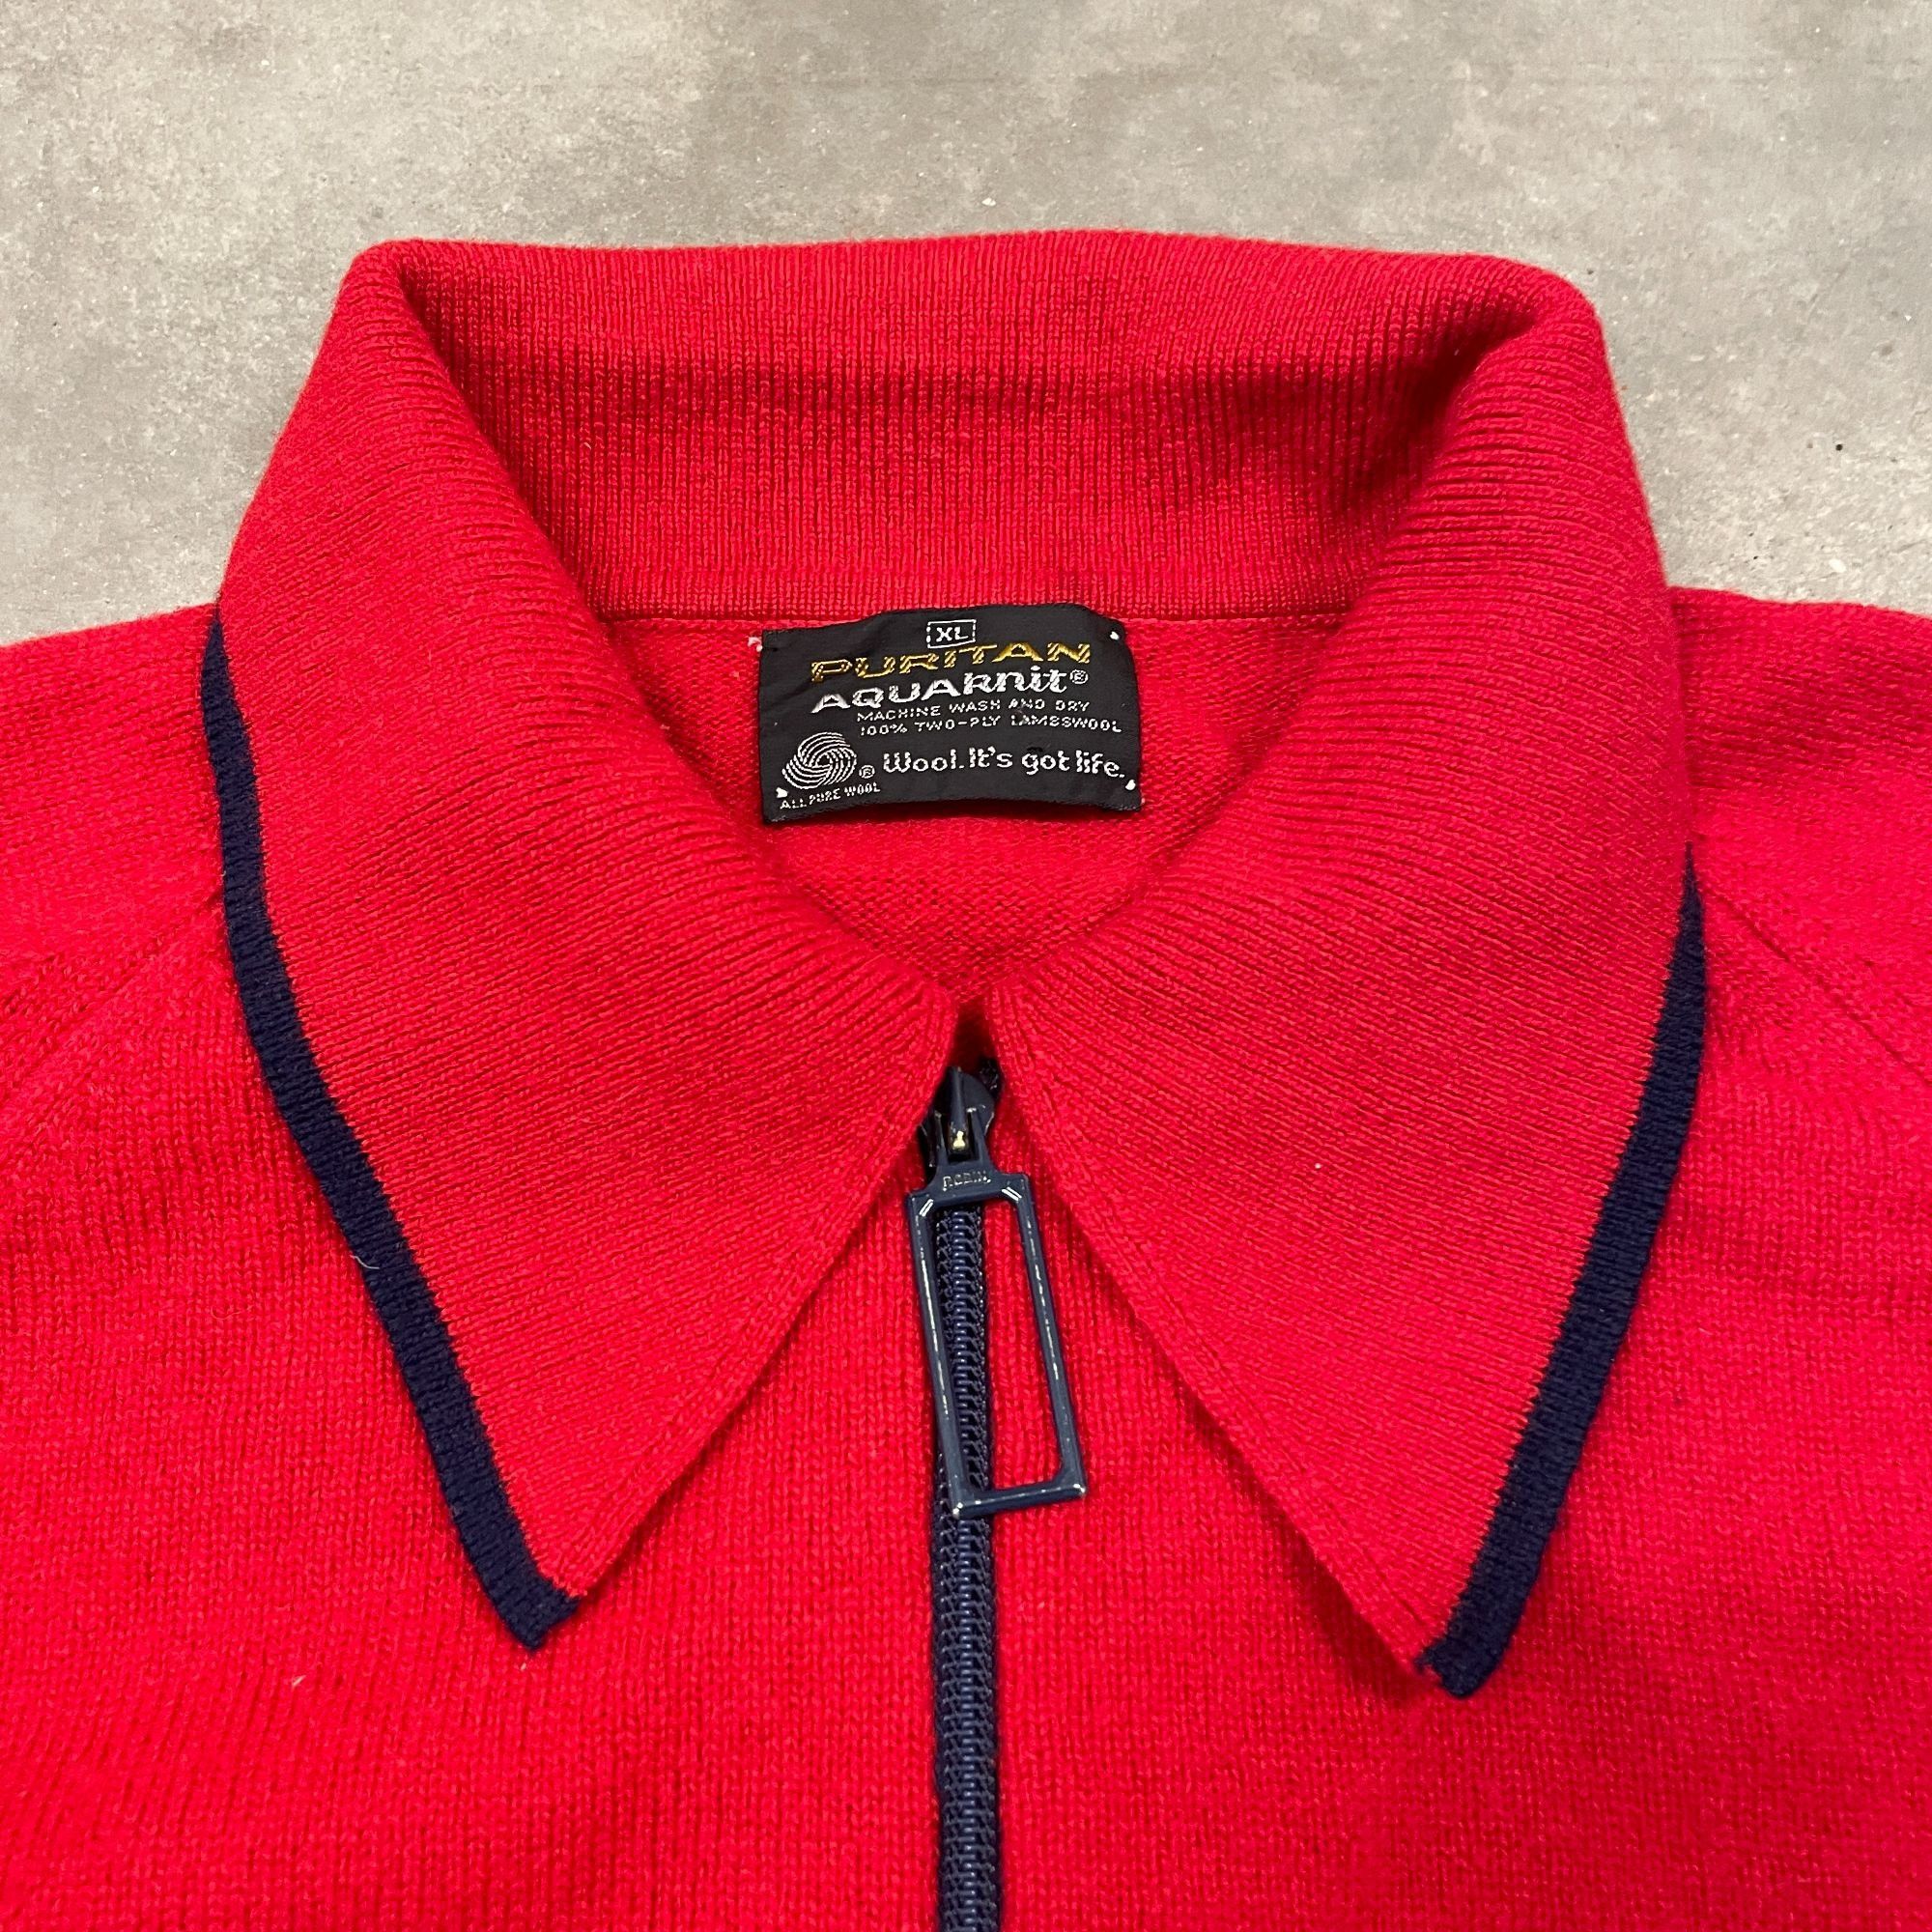 Vintage 60s VTG Red Wool Puritan Aquaknit Wool Zip Up Sweater XL Red Size US XL / EU 56 / 4 - 6 Thumbnail